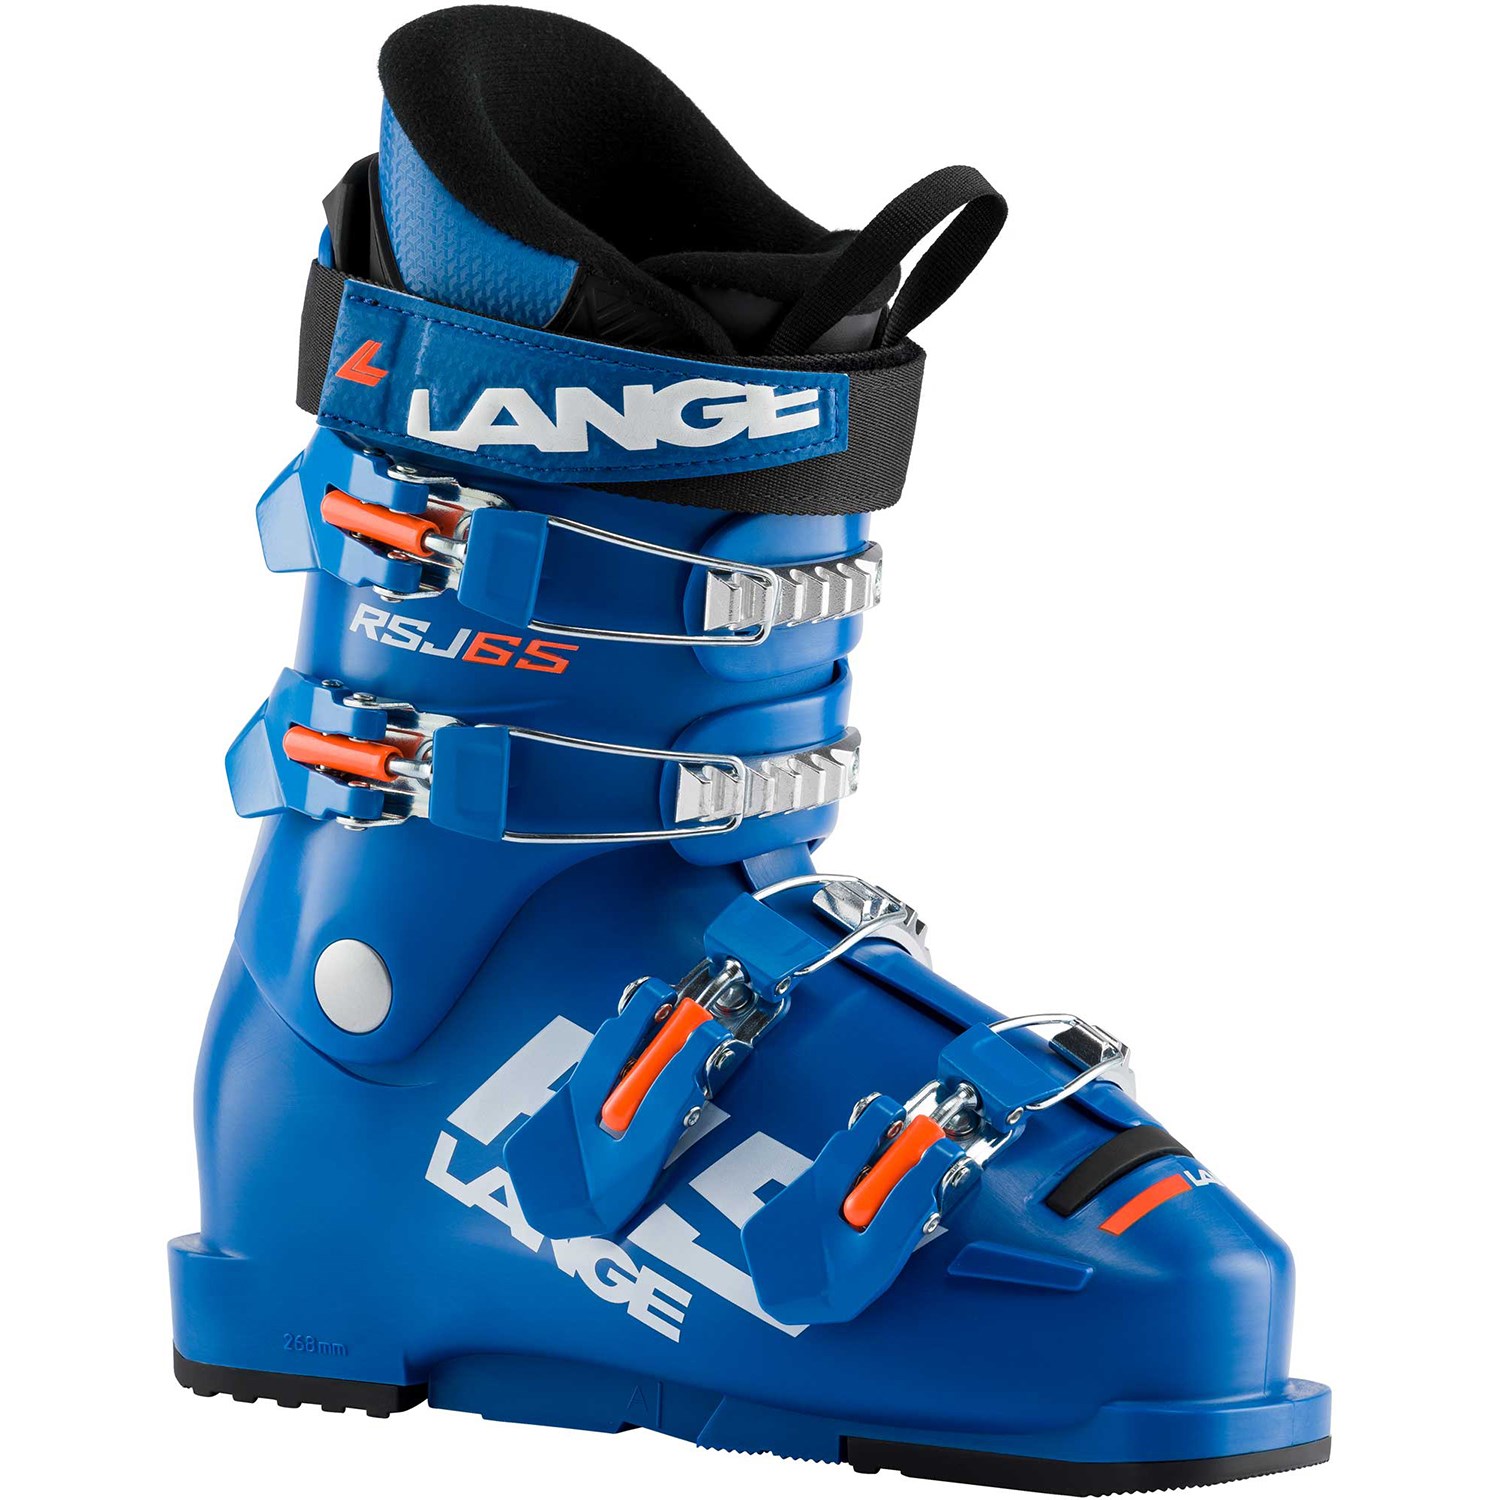 296 mm ski boot size